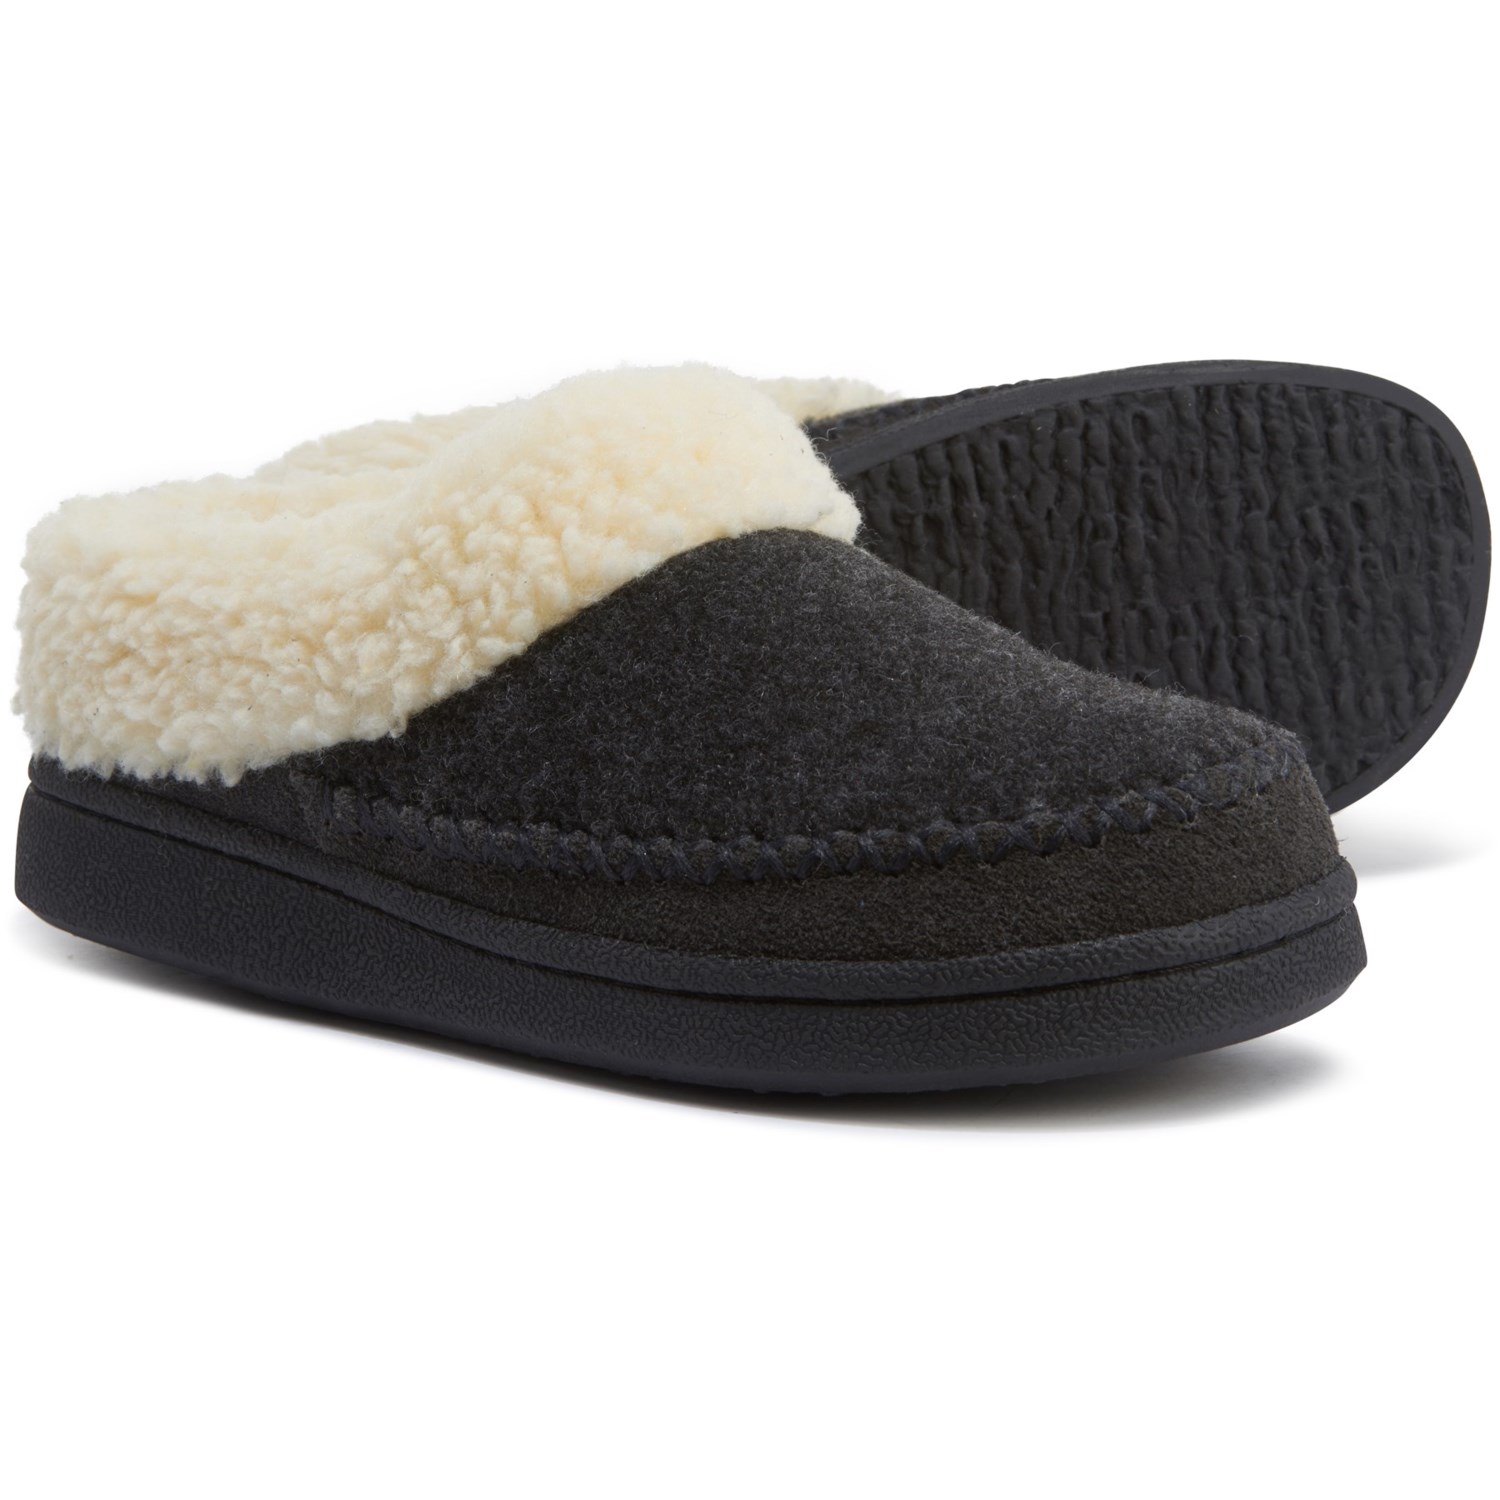 clarks scuff slippers